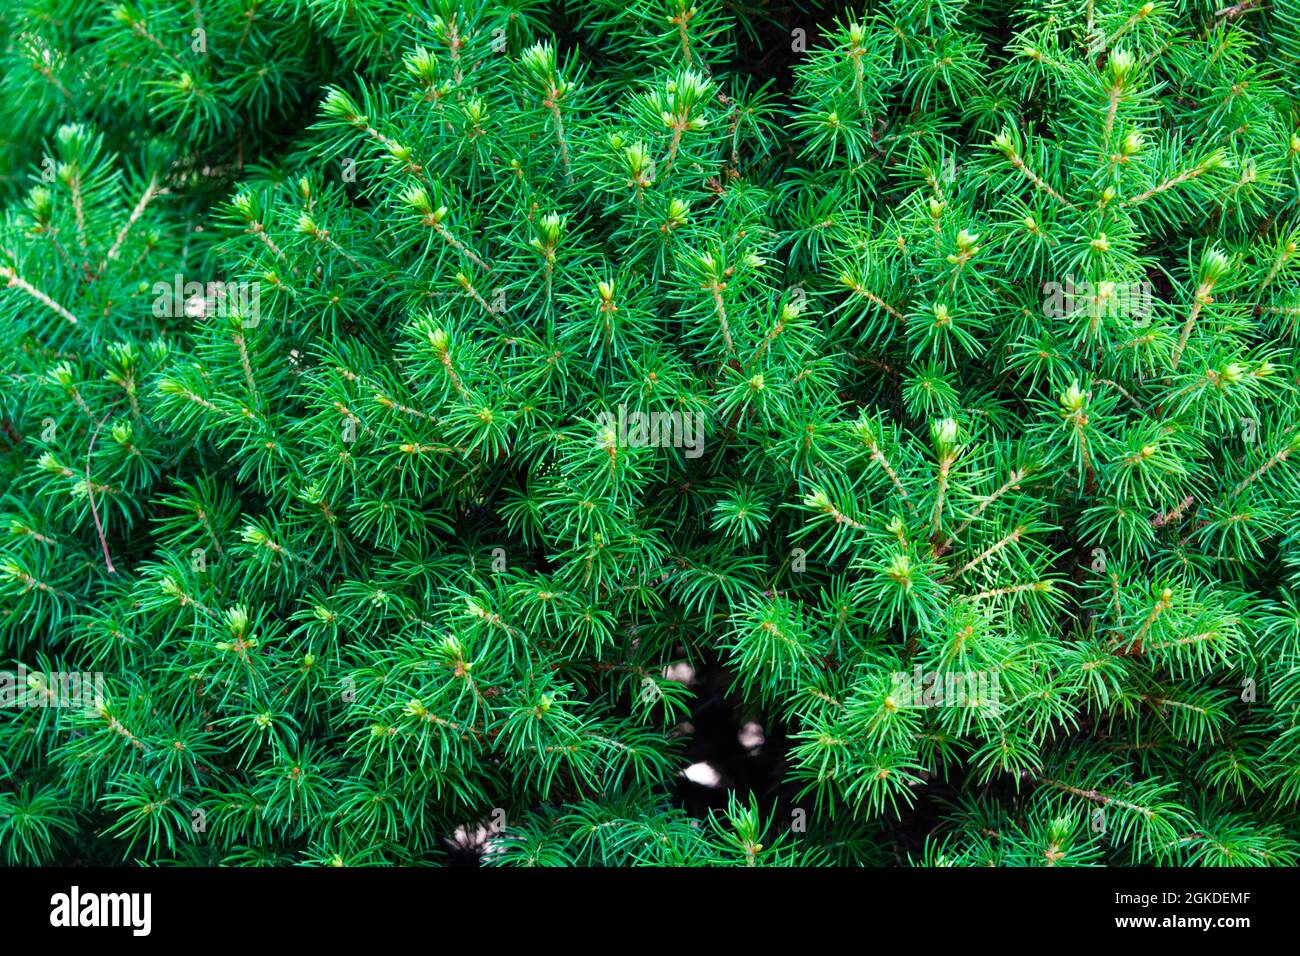 Canadian spruce green foliage. Decorative coniferous evergreen tree in garden Stock Photo